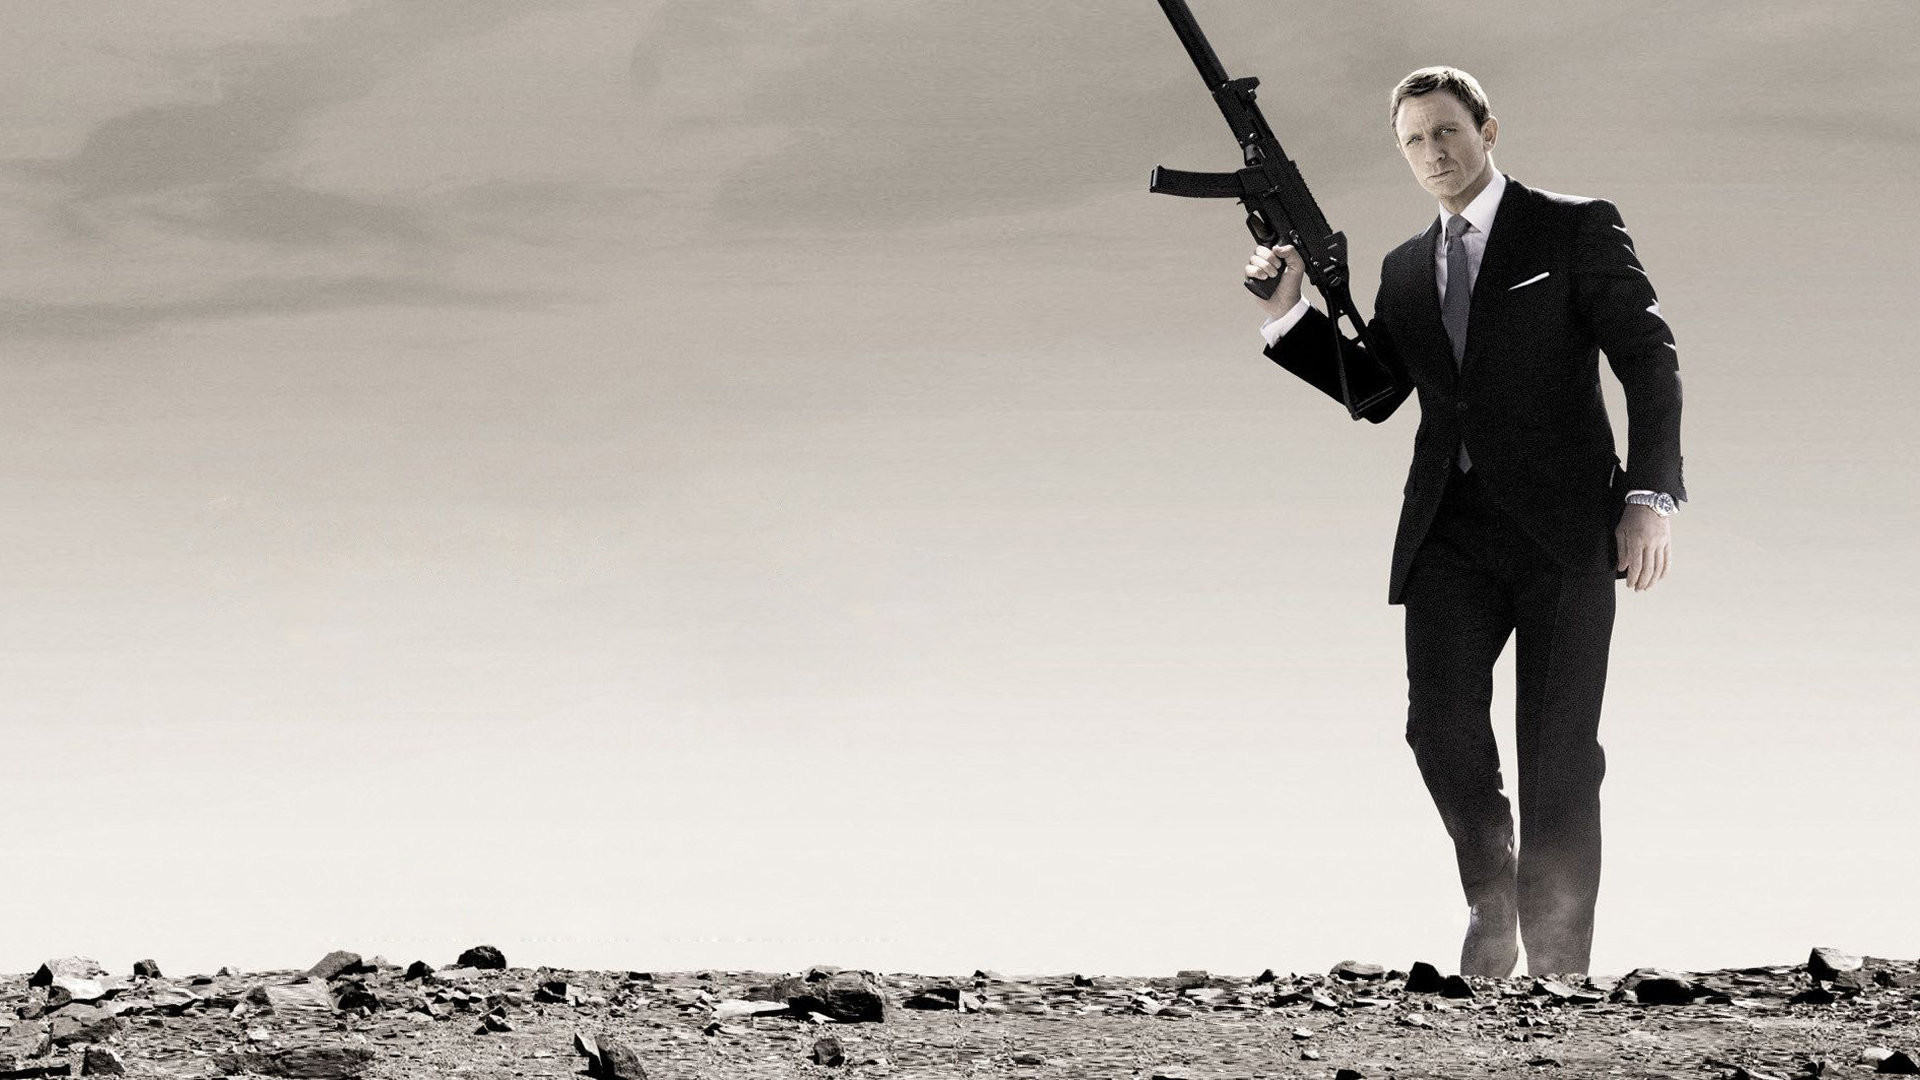 james bond 007 wallpaper,standing,suit,shooting sport,shooting,formal wear